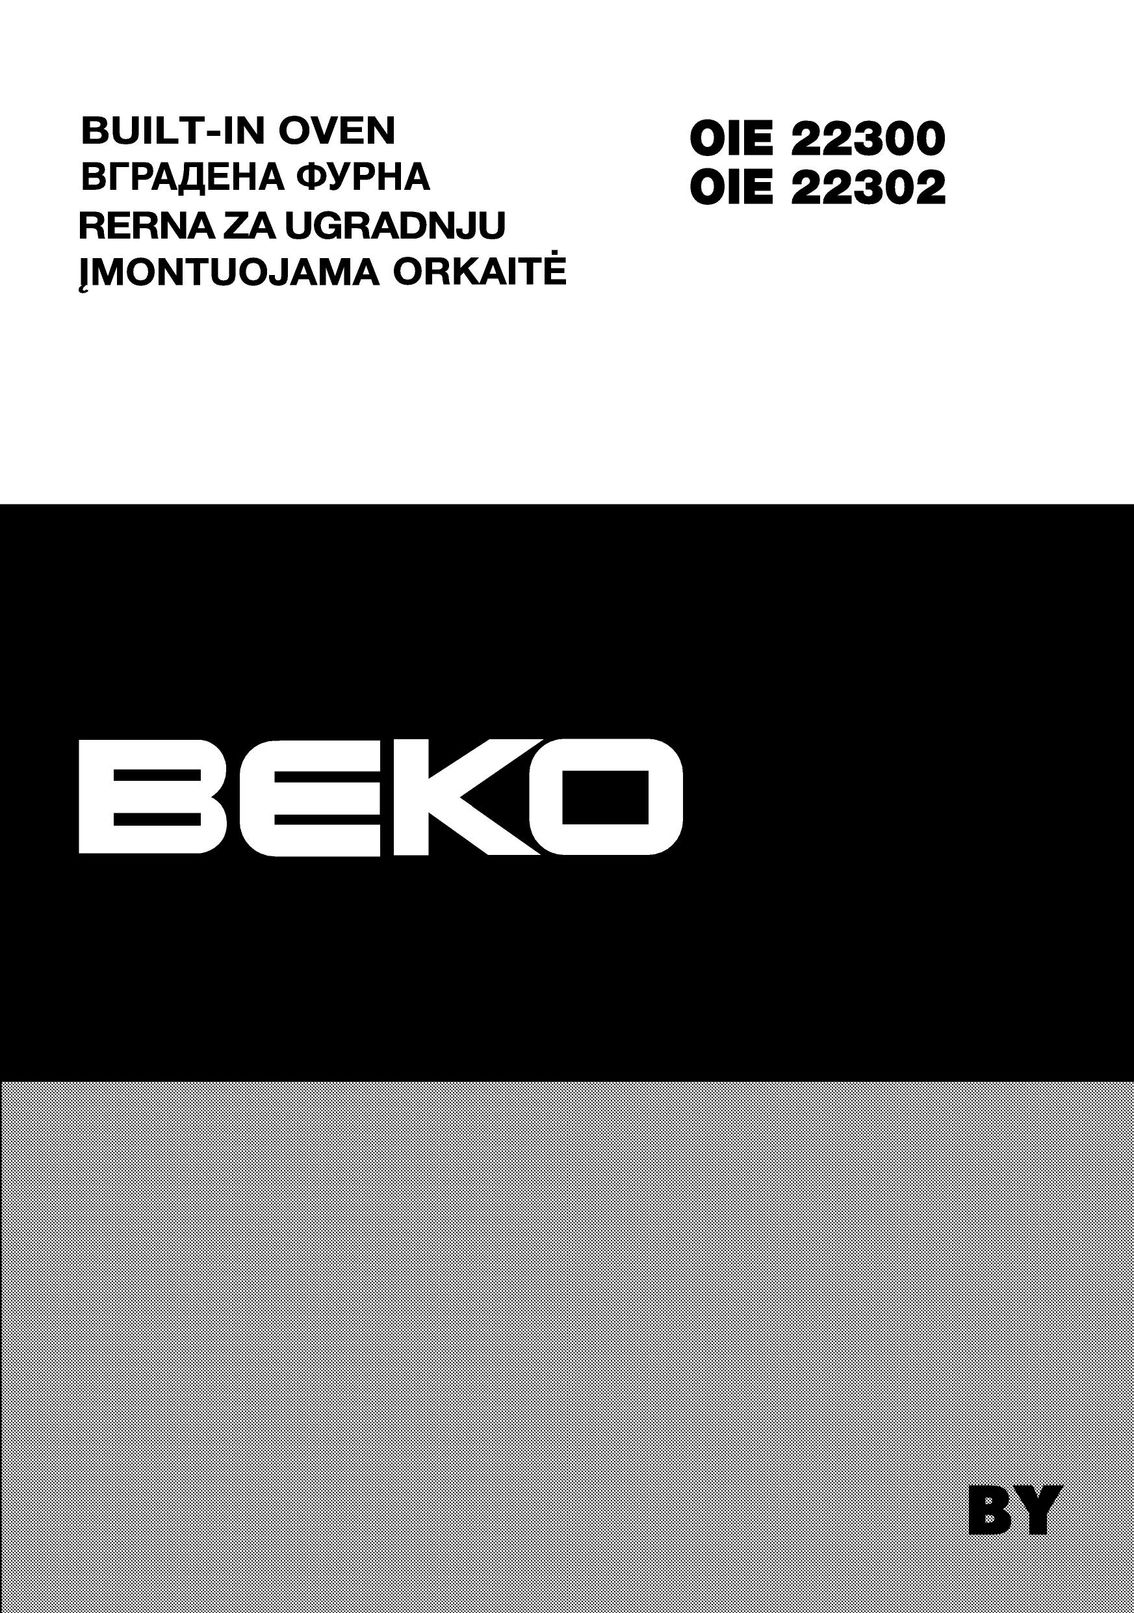 Beko 22300 Oven User Manual